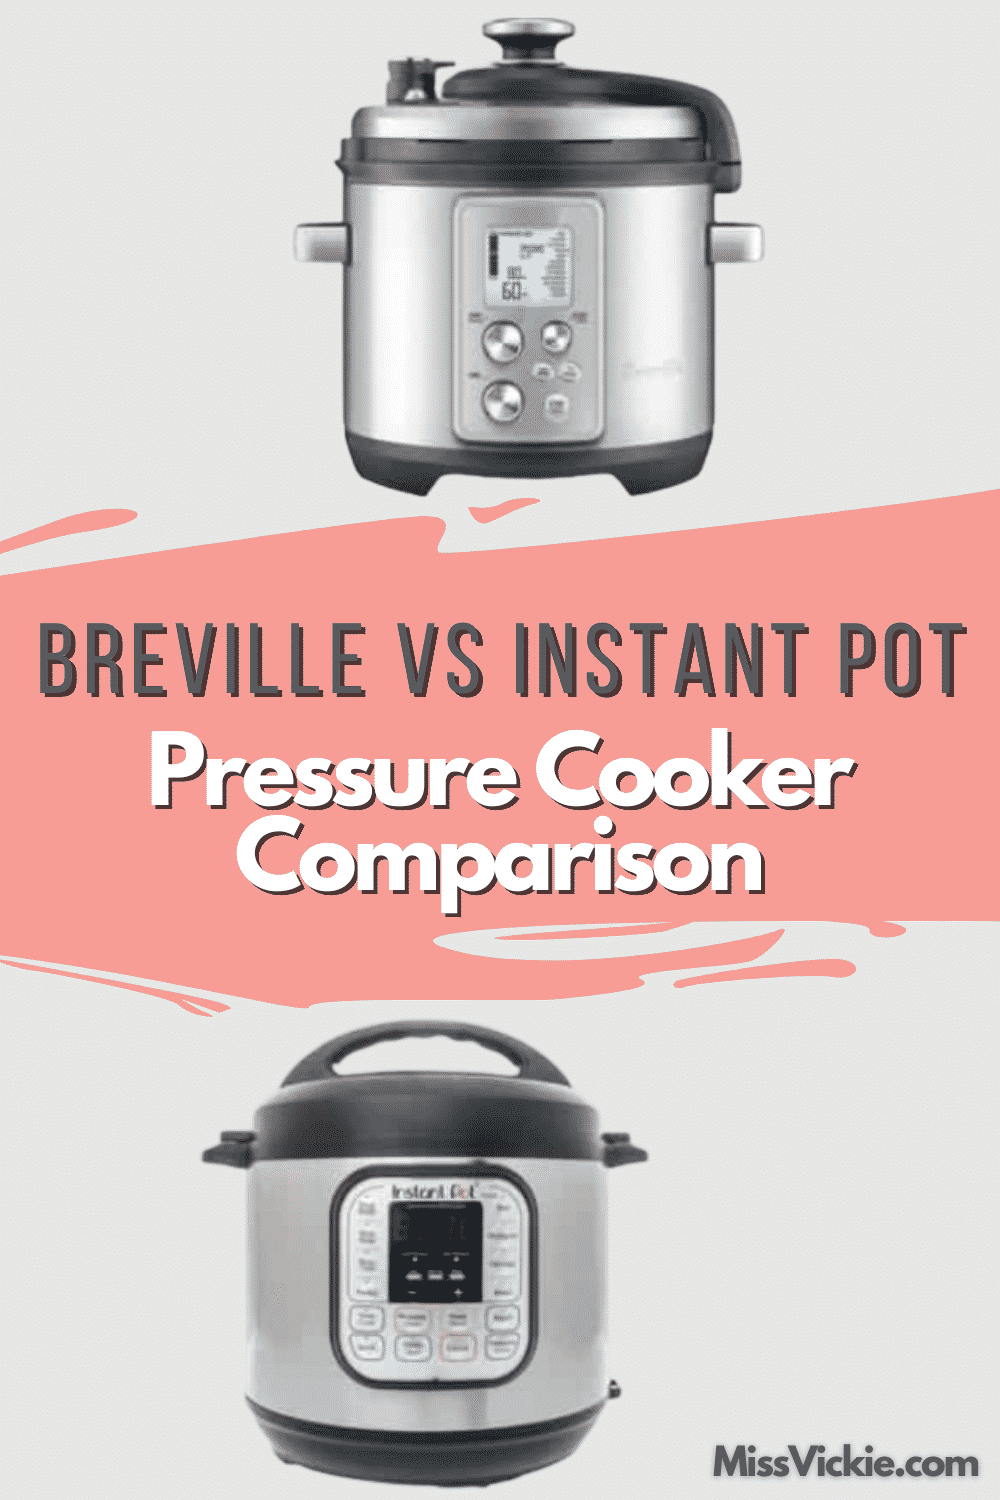 Breville vs Instant Pot